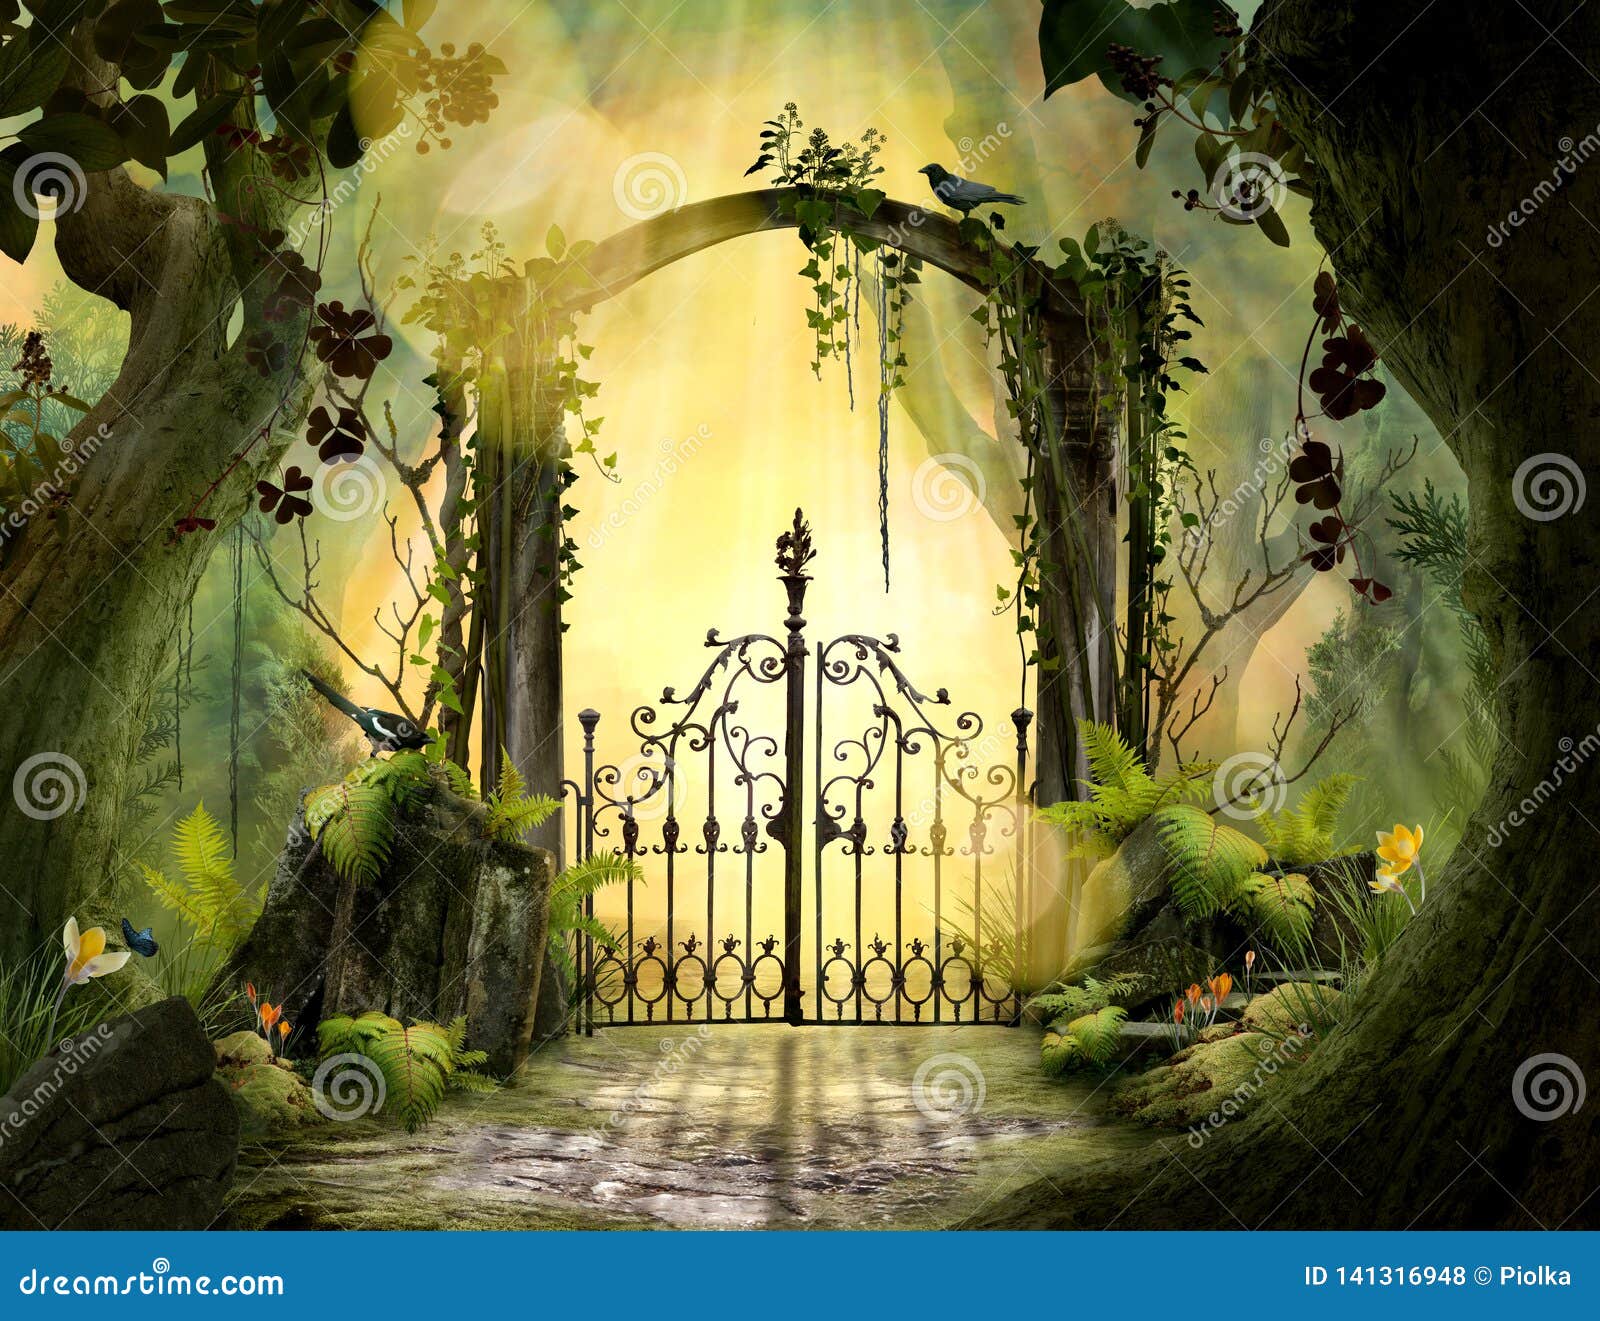 beautiful dreamy landscape archway in an enchanted garden